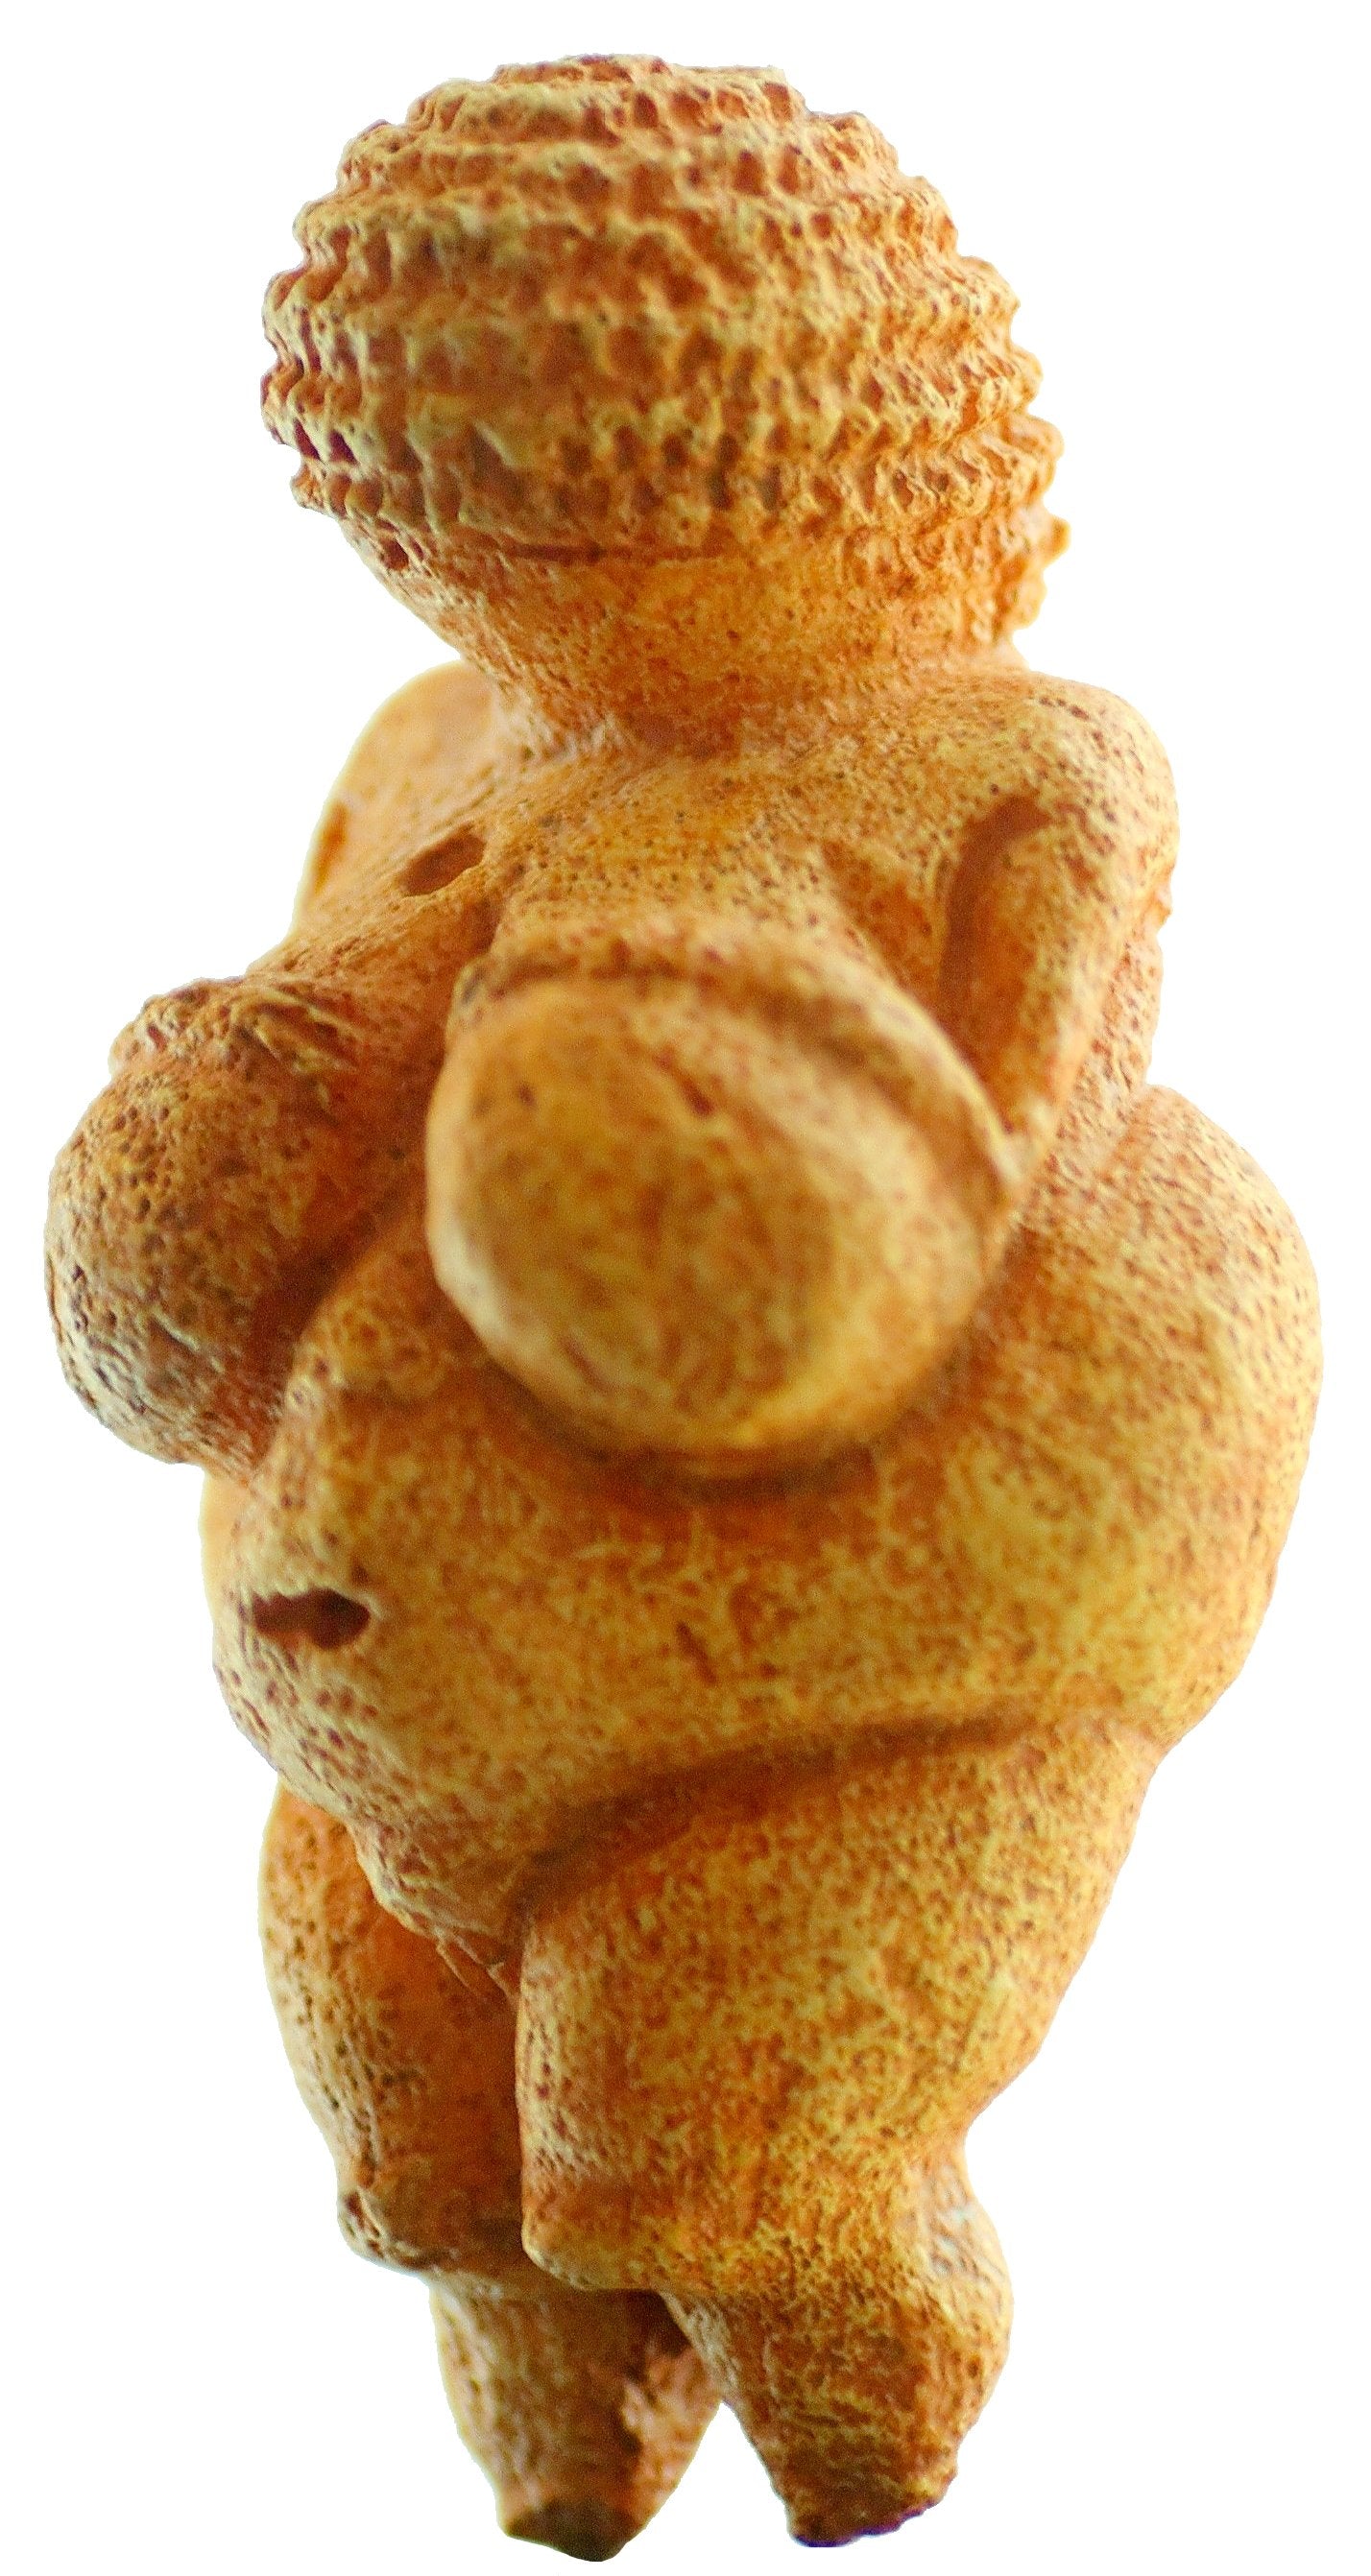 La Venus de Willendorf